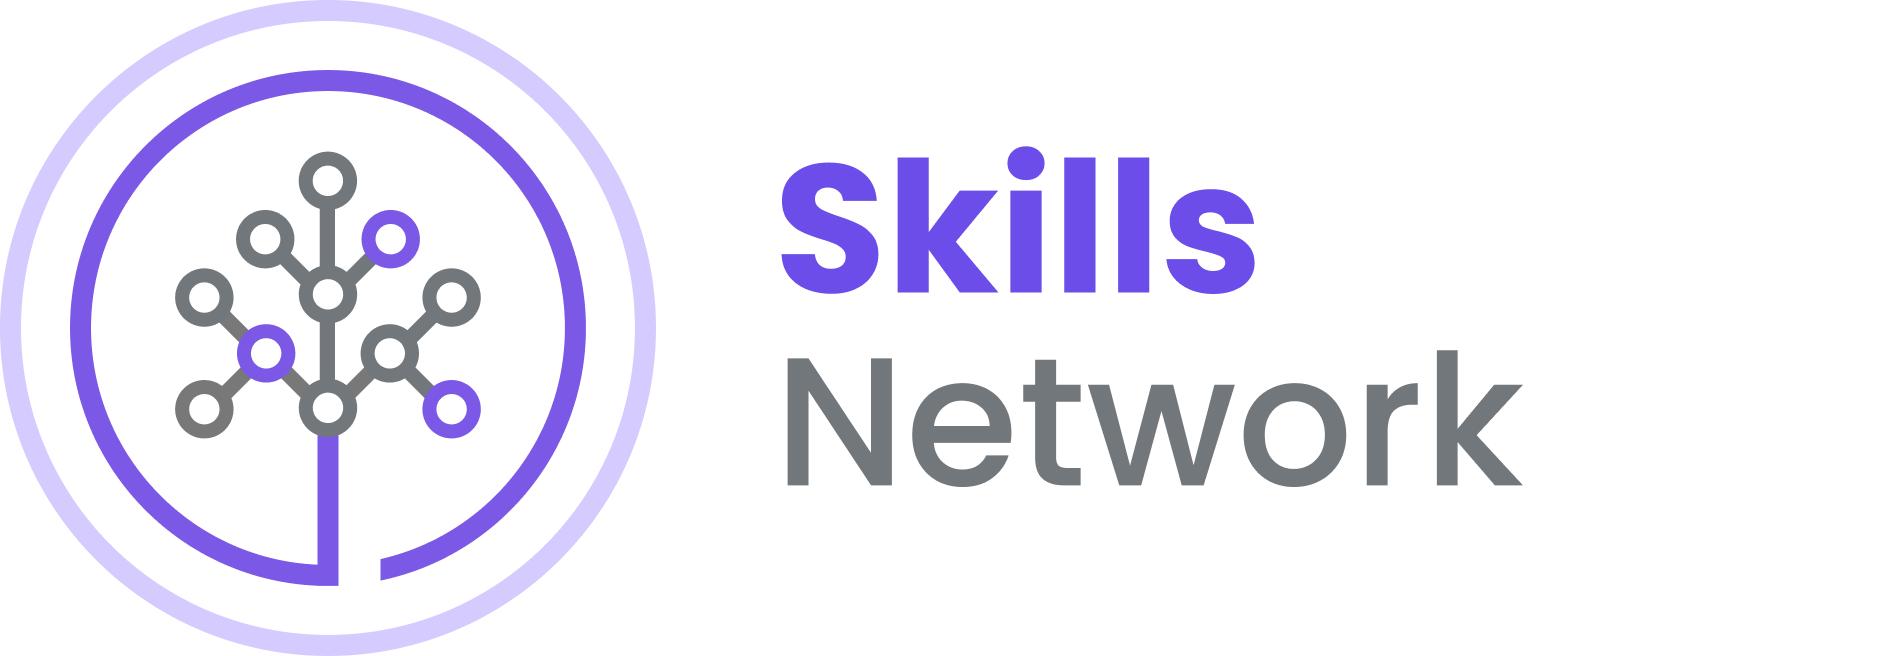 Skills Network Labs Updates